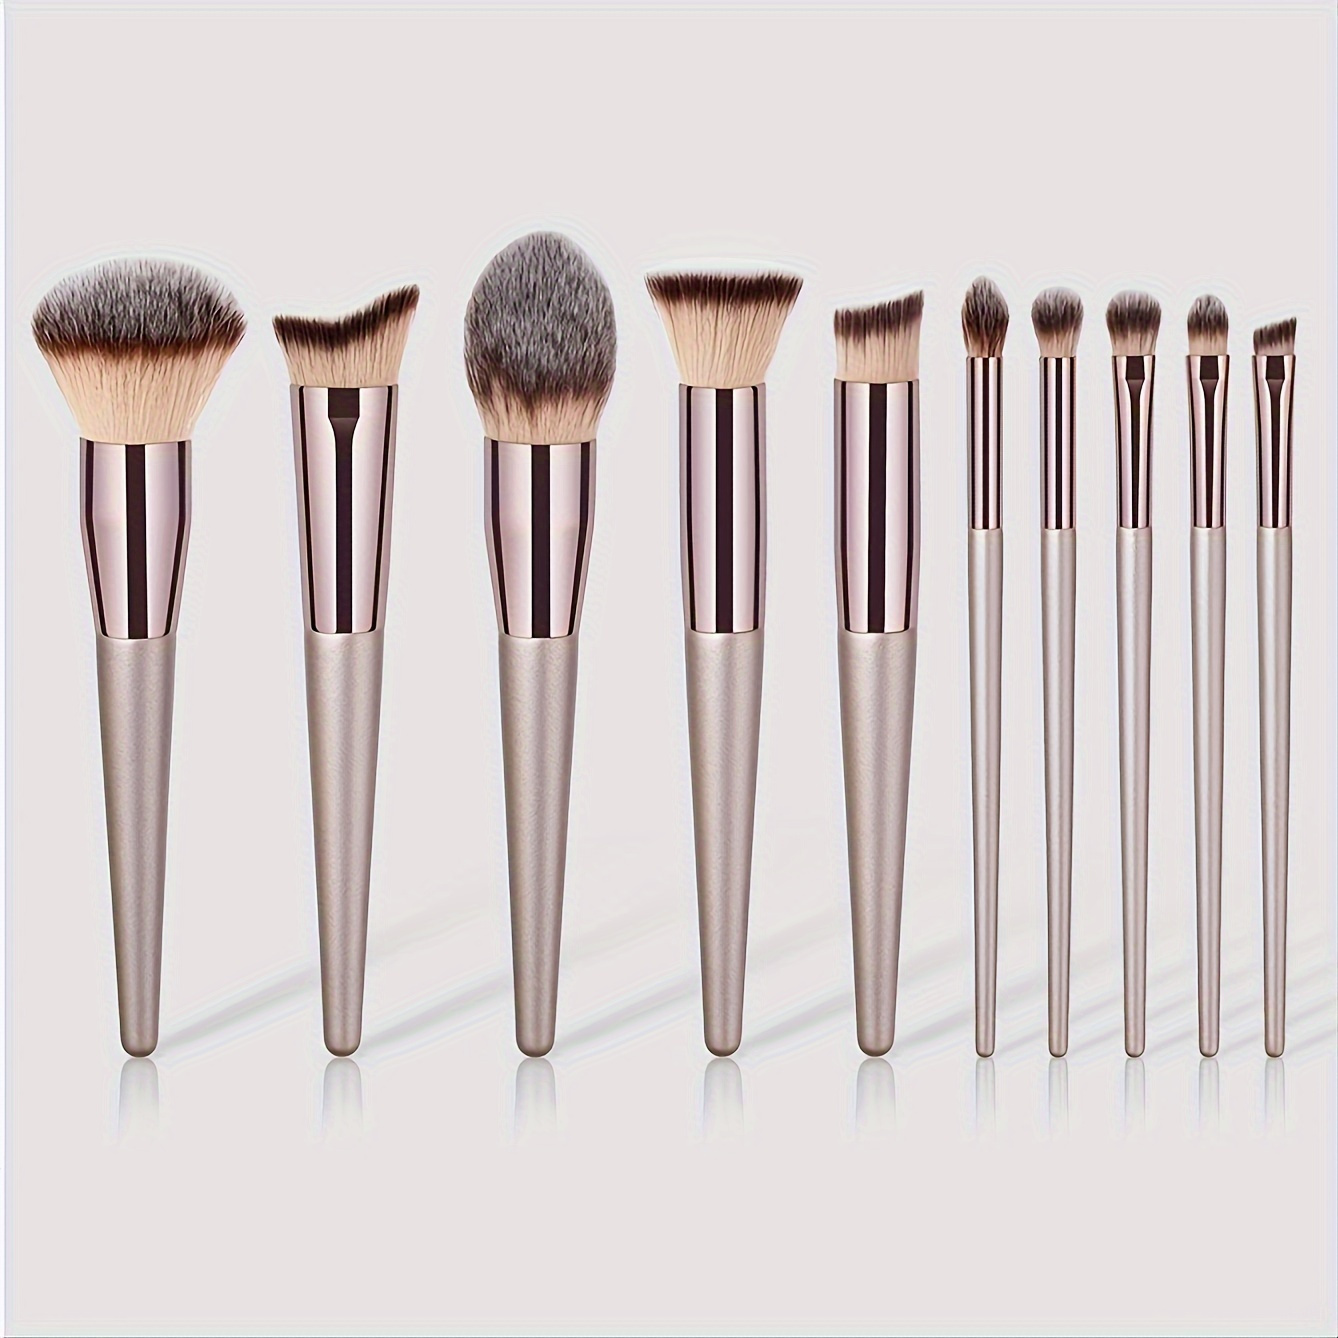 

10pcs/set Professional Multi-functional Makeup Brushes Makeup Kit, Foundation Brush, Powder Concealers Eye Shadows Blush Make Up Brushes